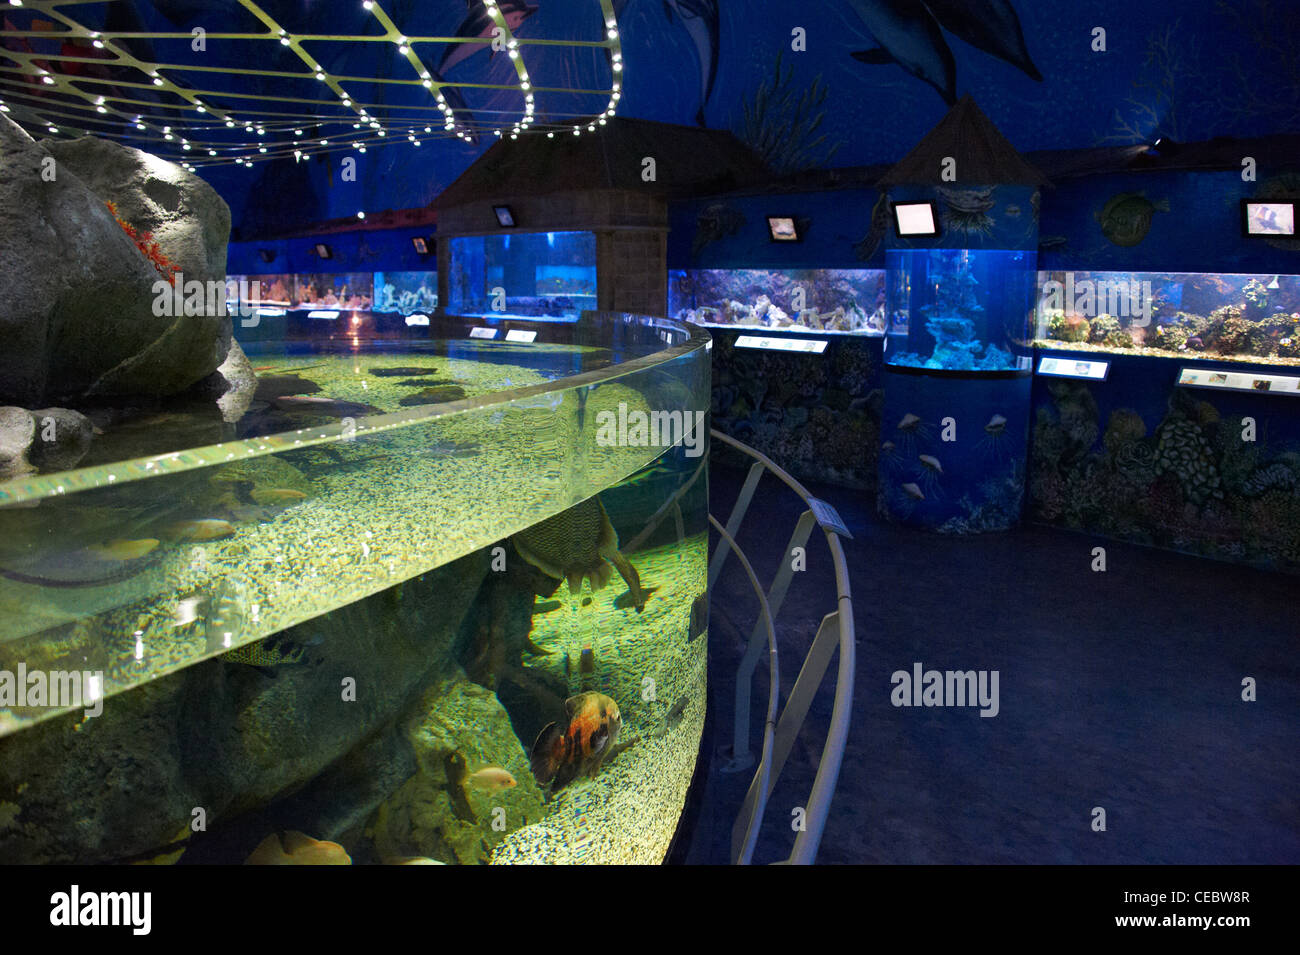 Sea World aquariums Prague Czech Republic Stock Photo - Alamy